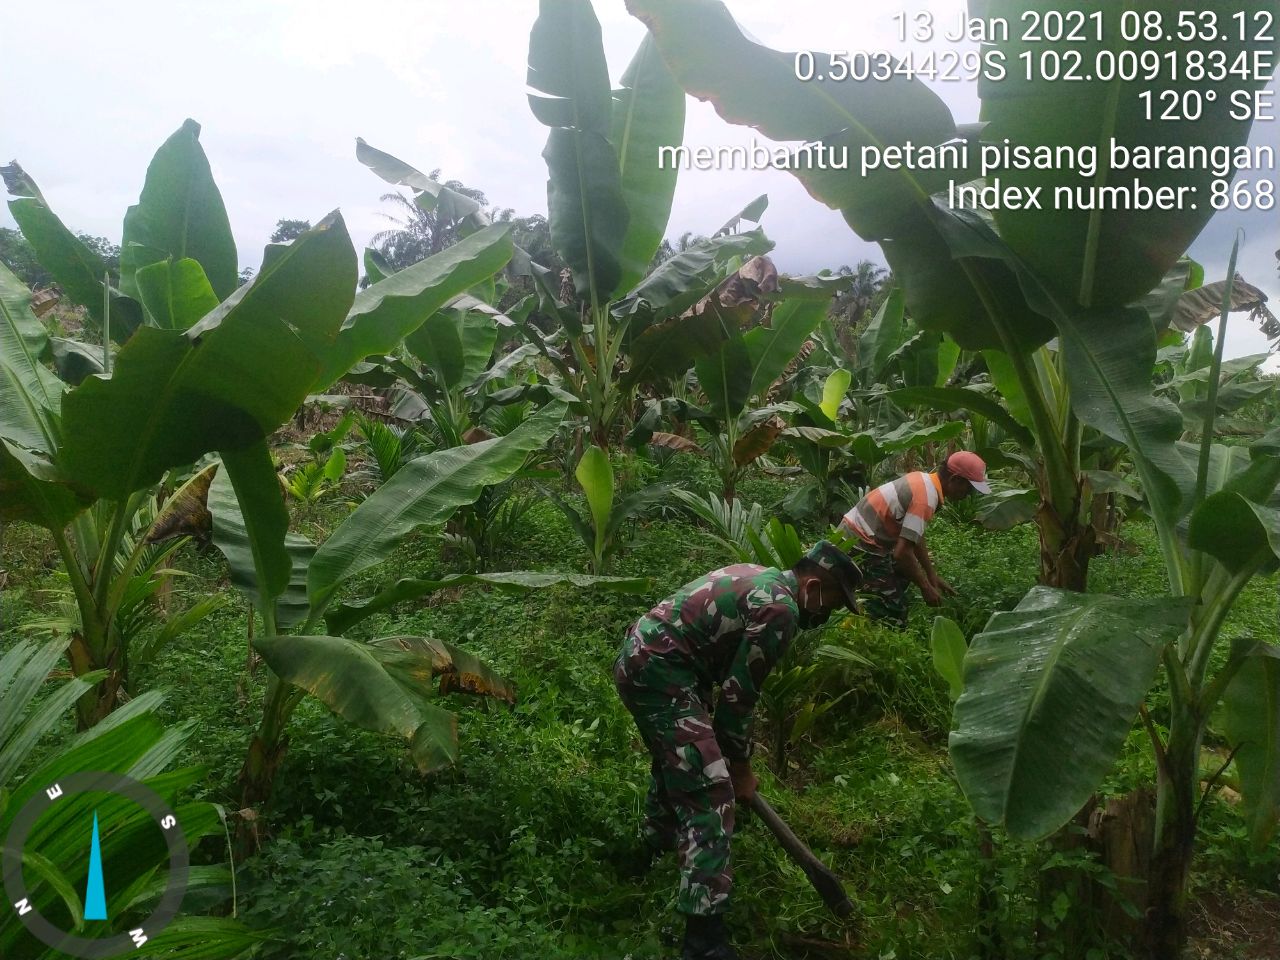 Tingkatkan Swasembada, Serda W. Liquisa Bantu Petani Bersihkan Tanaman Pohon Pisang